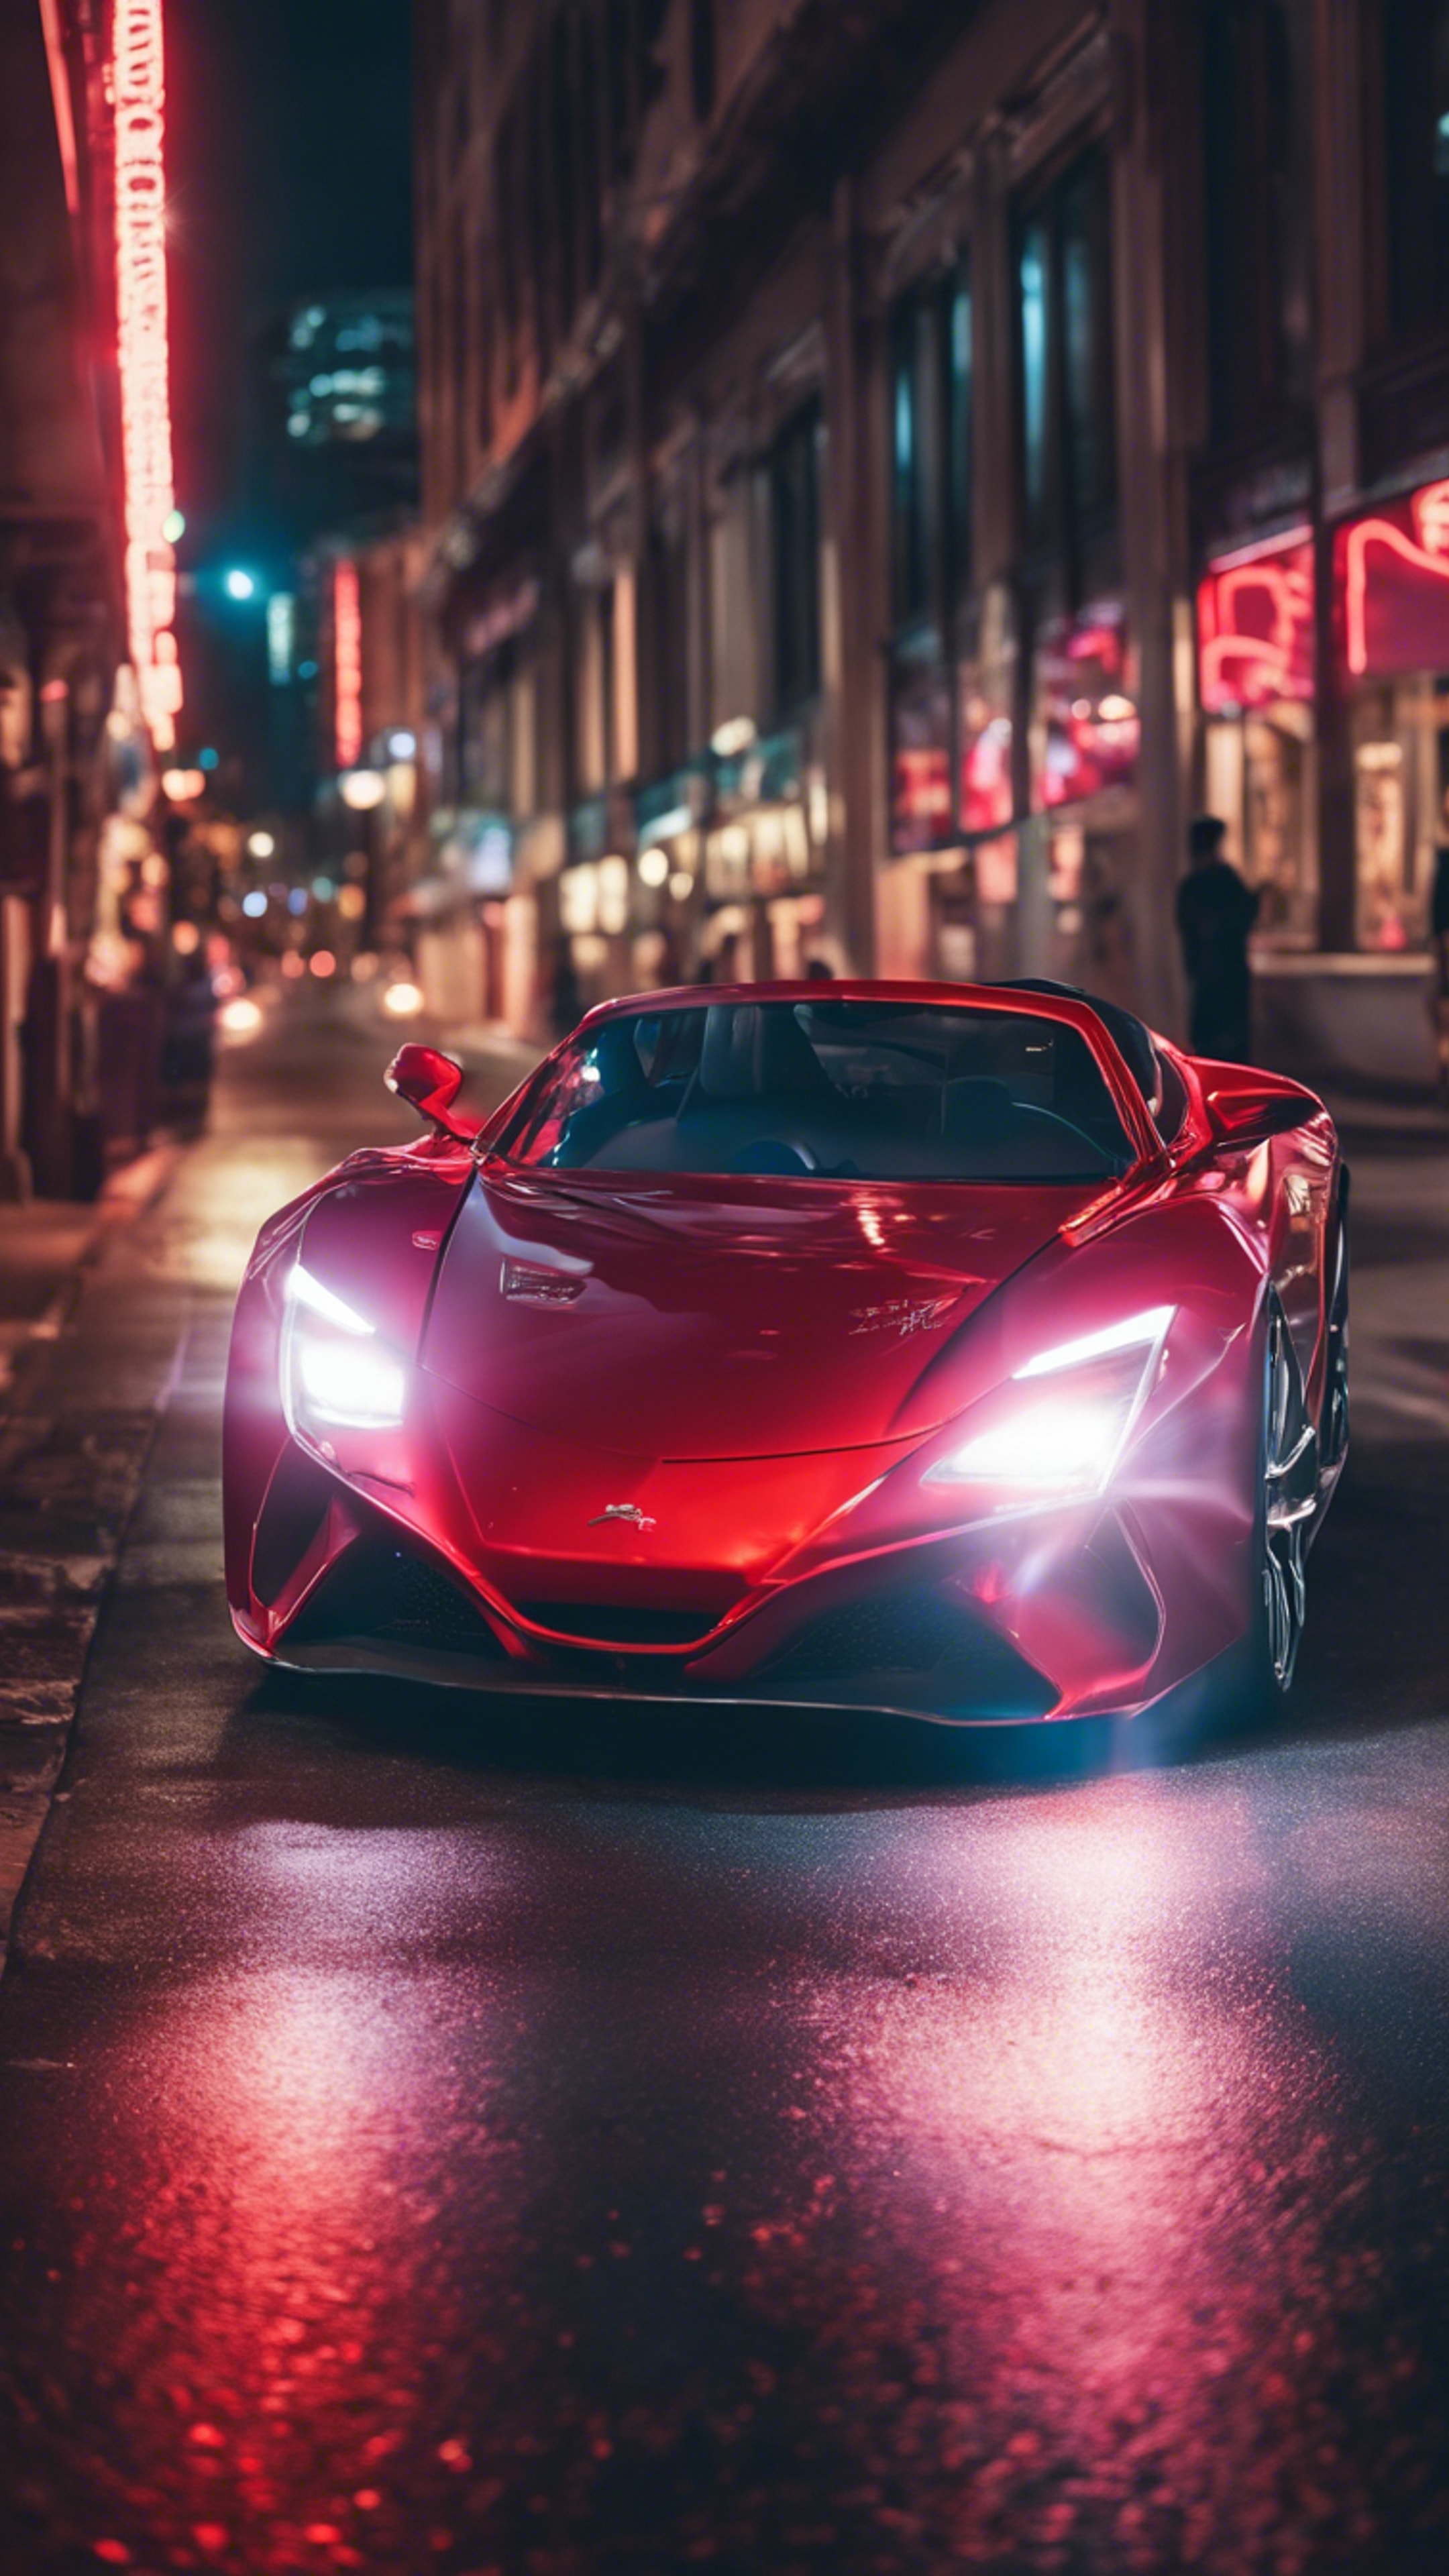 A sleek, cool red neon sports car zipping along a nighttime city street. Tapetai[c8ae8bc93cf04b2eb441]